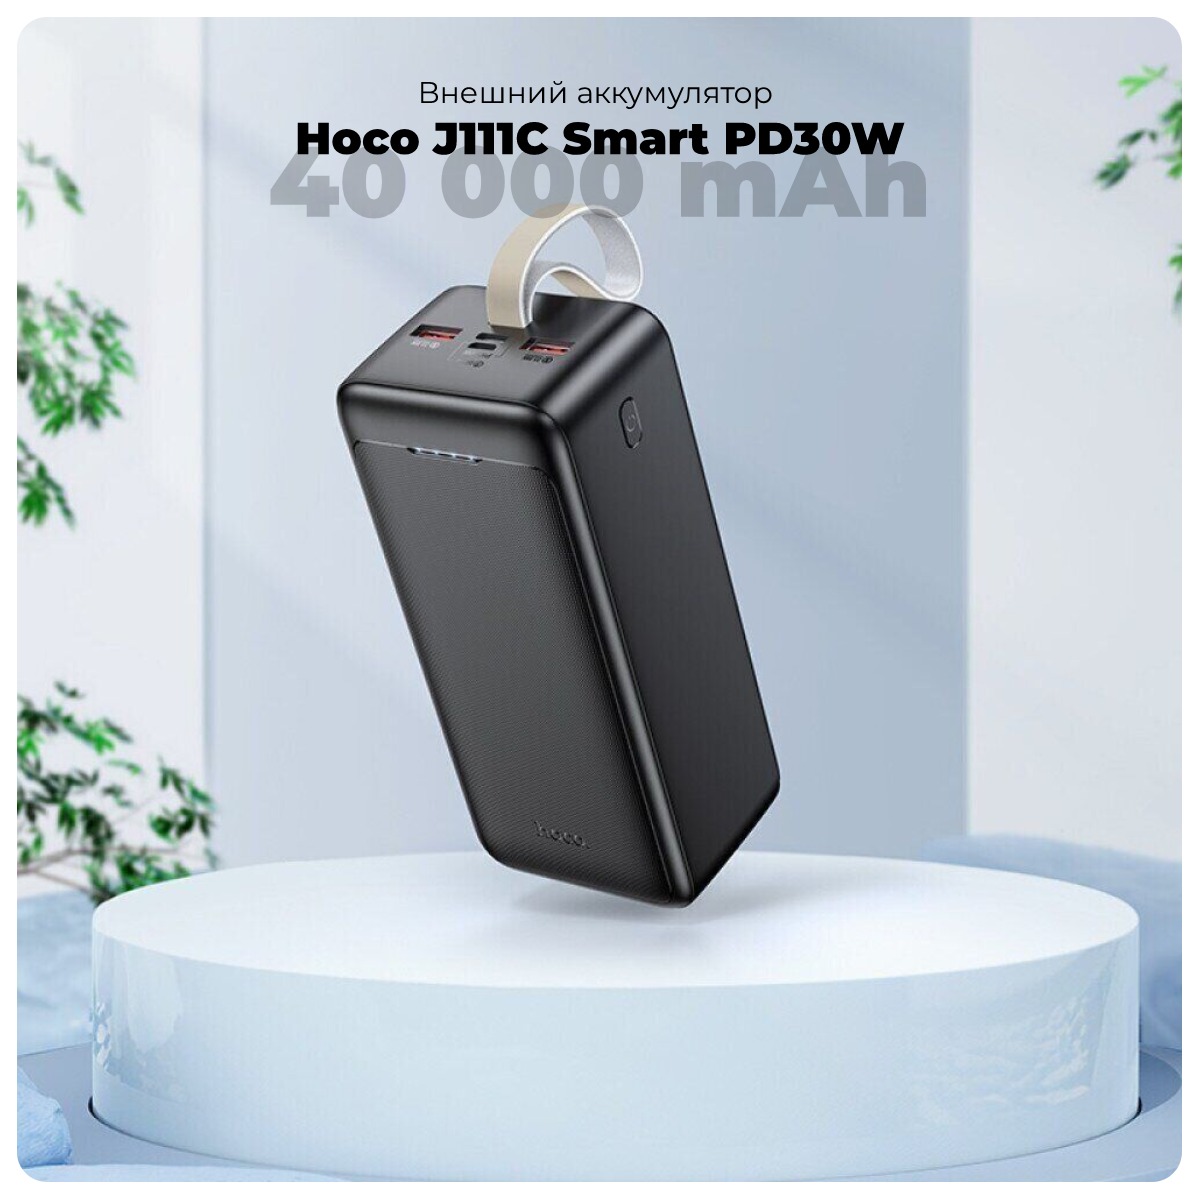 Hoco-J111C-Smart-PD30W-40000-mAh-01